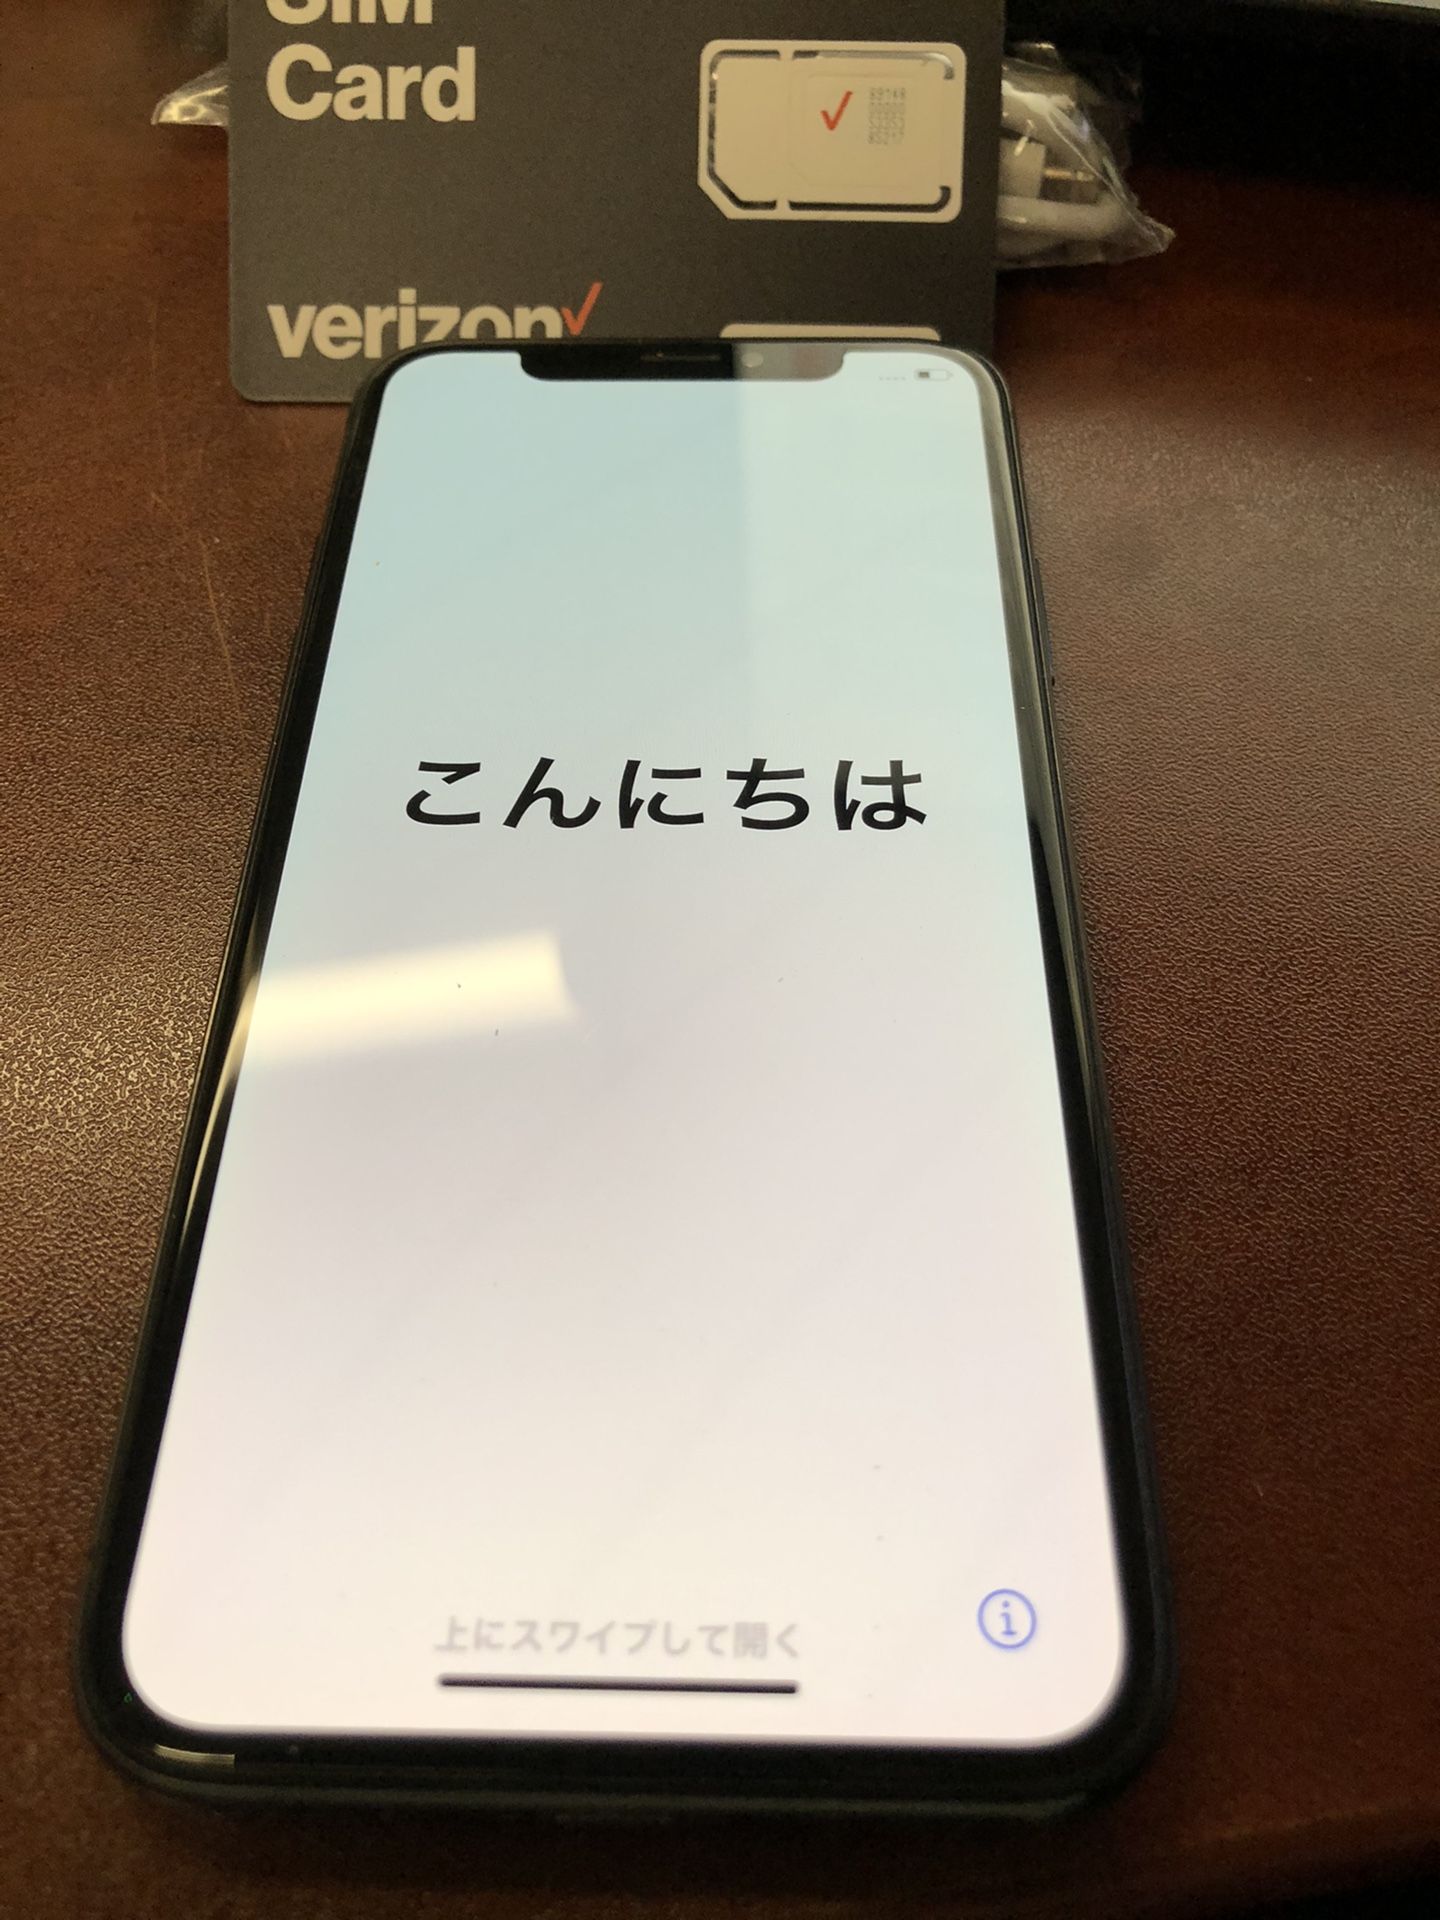 Iphone X 64gb space gray verizon Mint